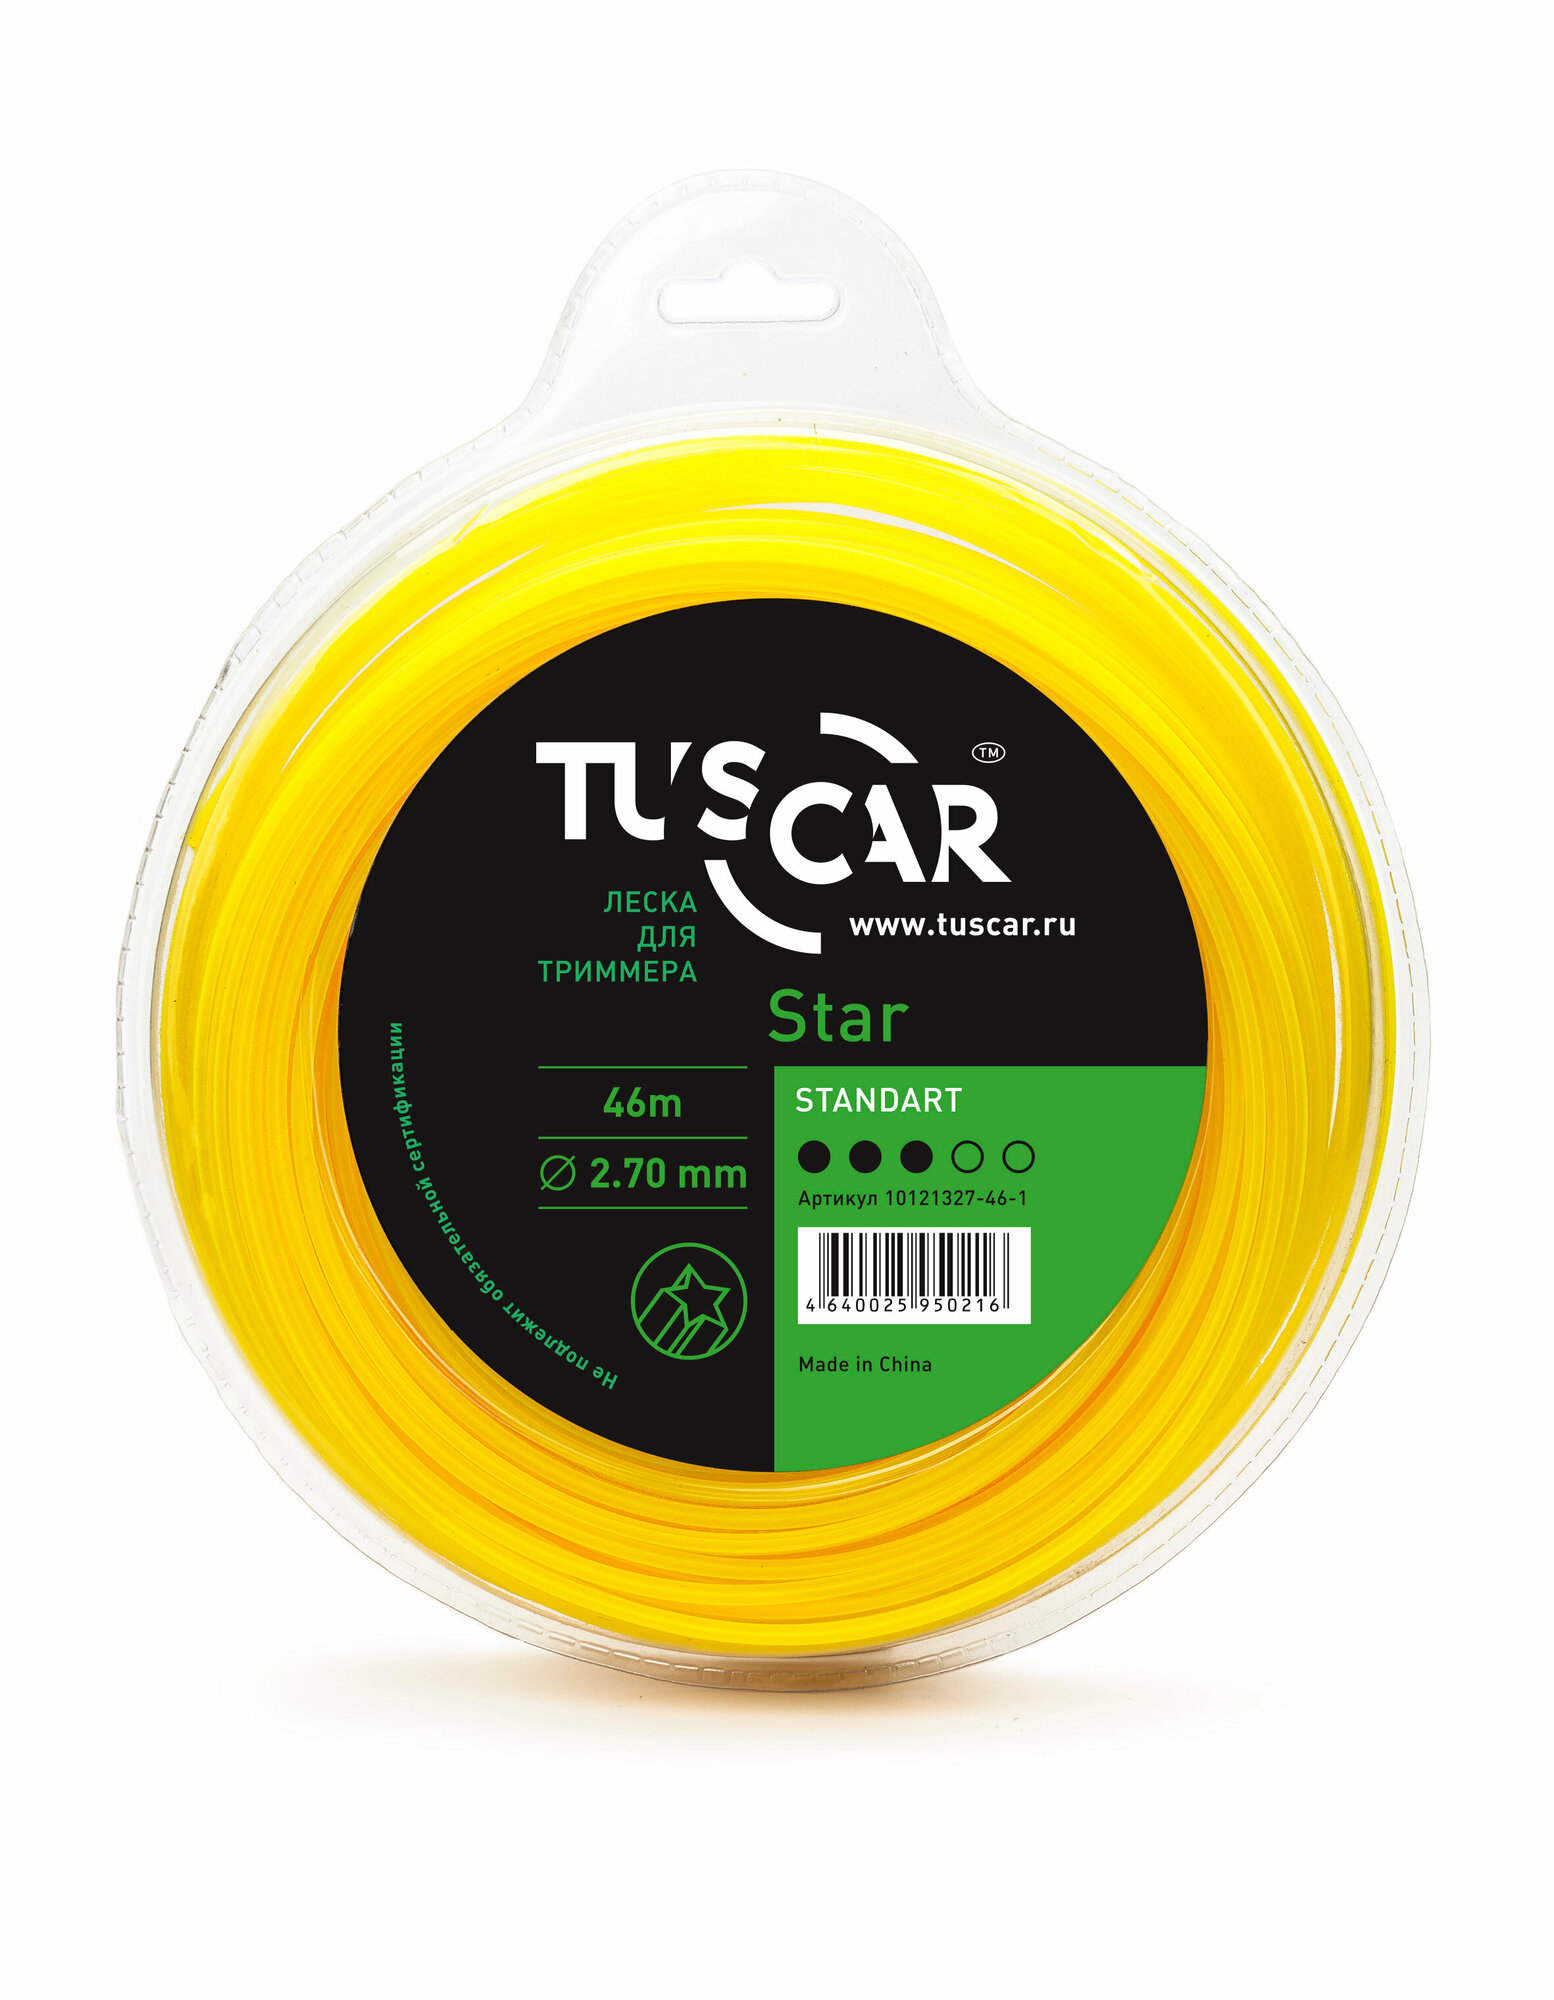 Tuscar Леска для триммера Star, Standart, 2.7mmx46m 10121327-46-1